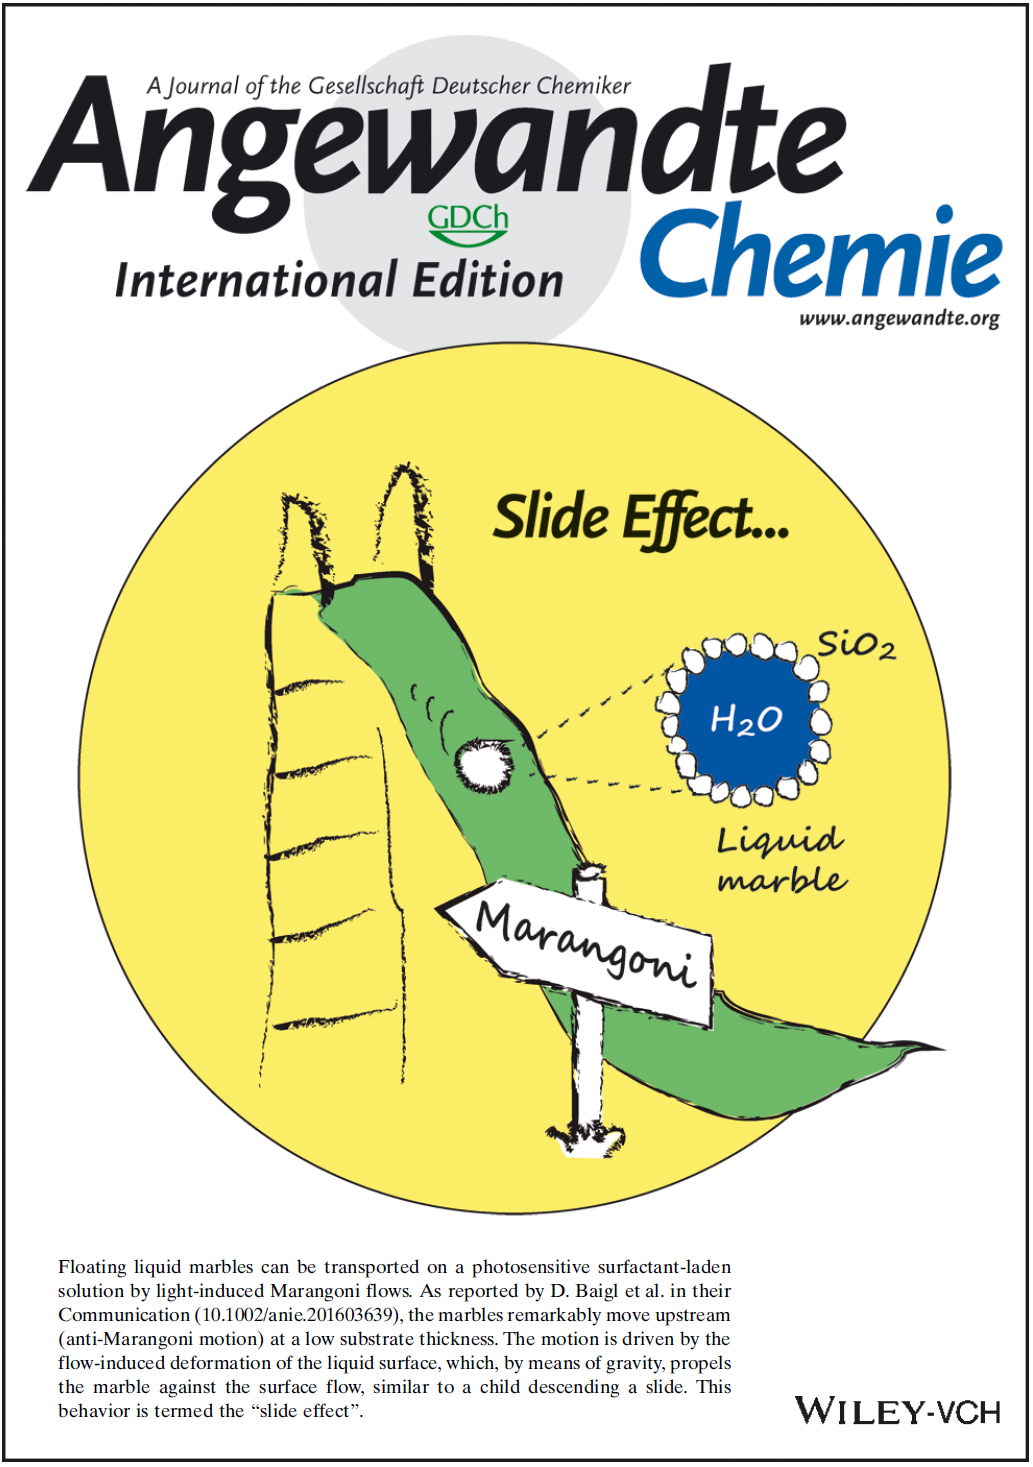 The Slide Effect hits Angewandte Cover!